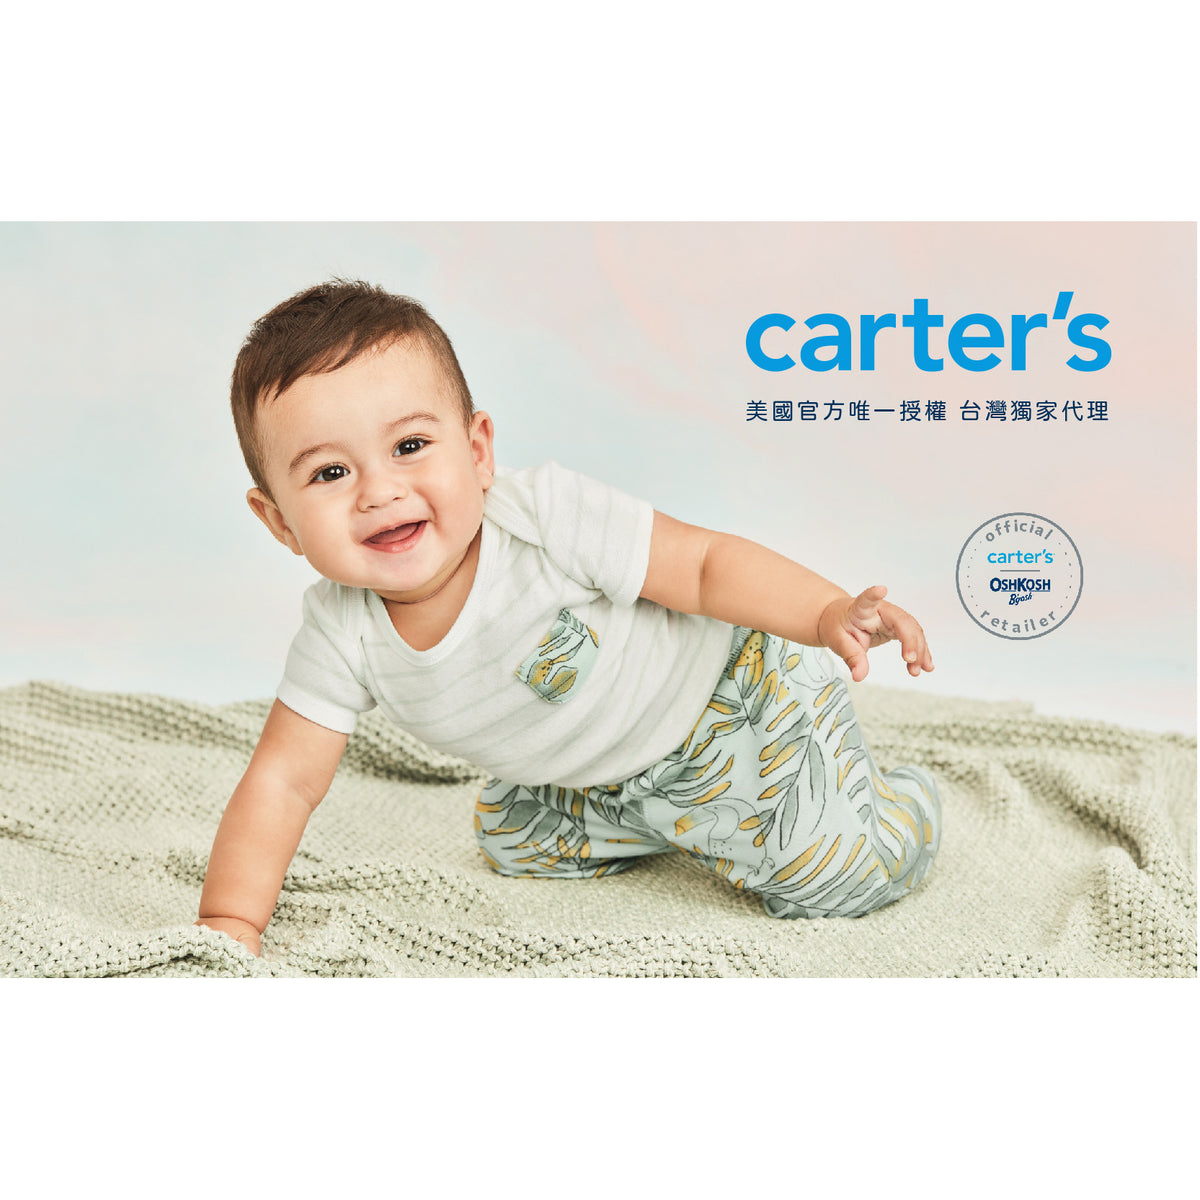 Carter's 藍色格紋心包屁衣(6M-24M)